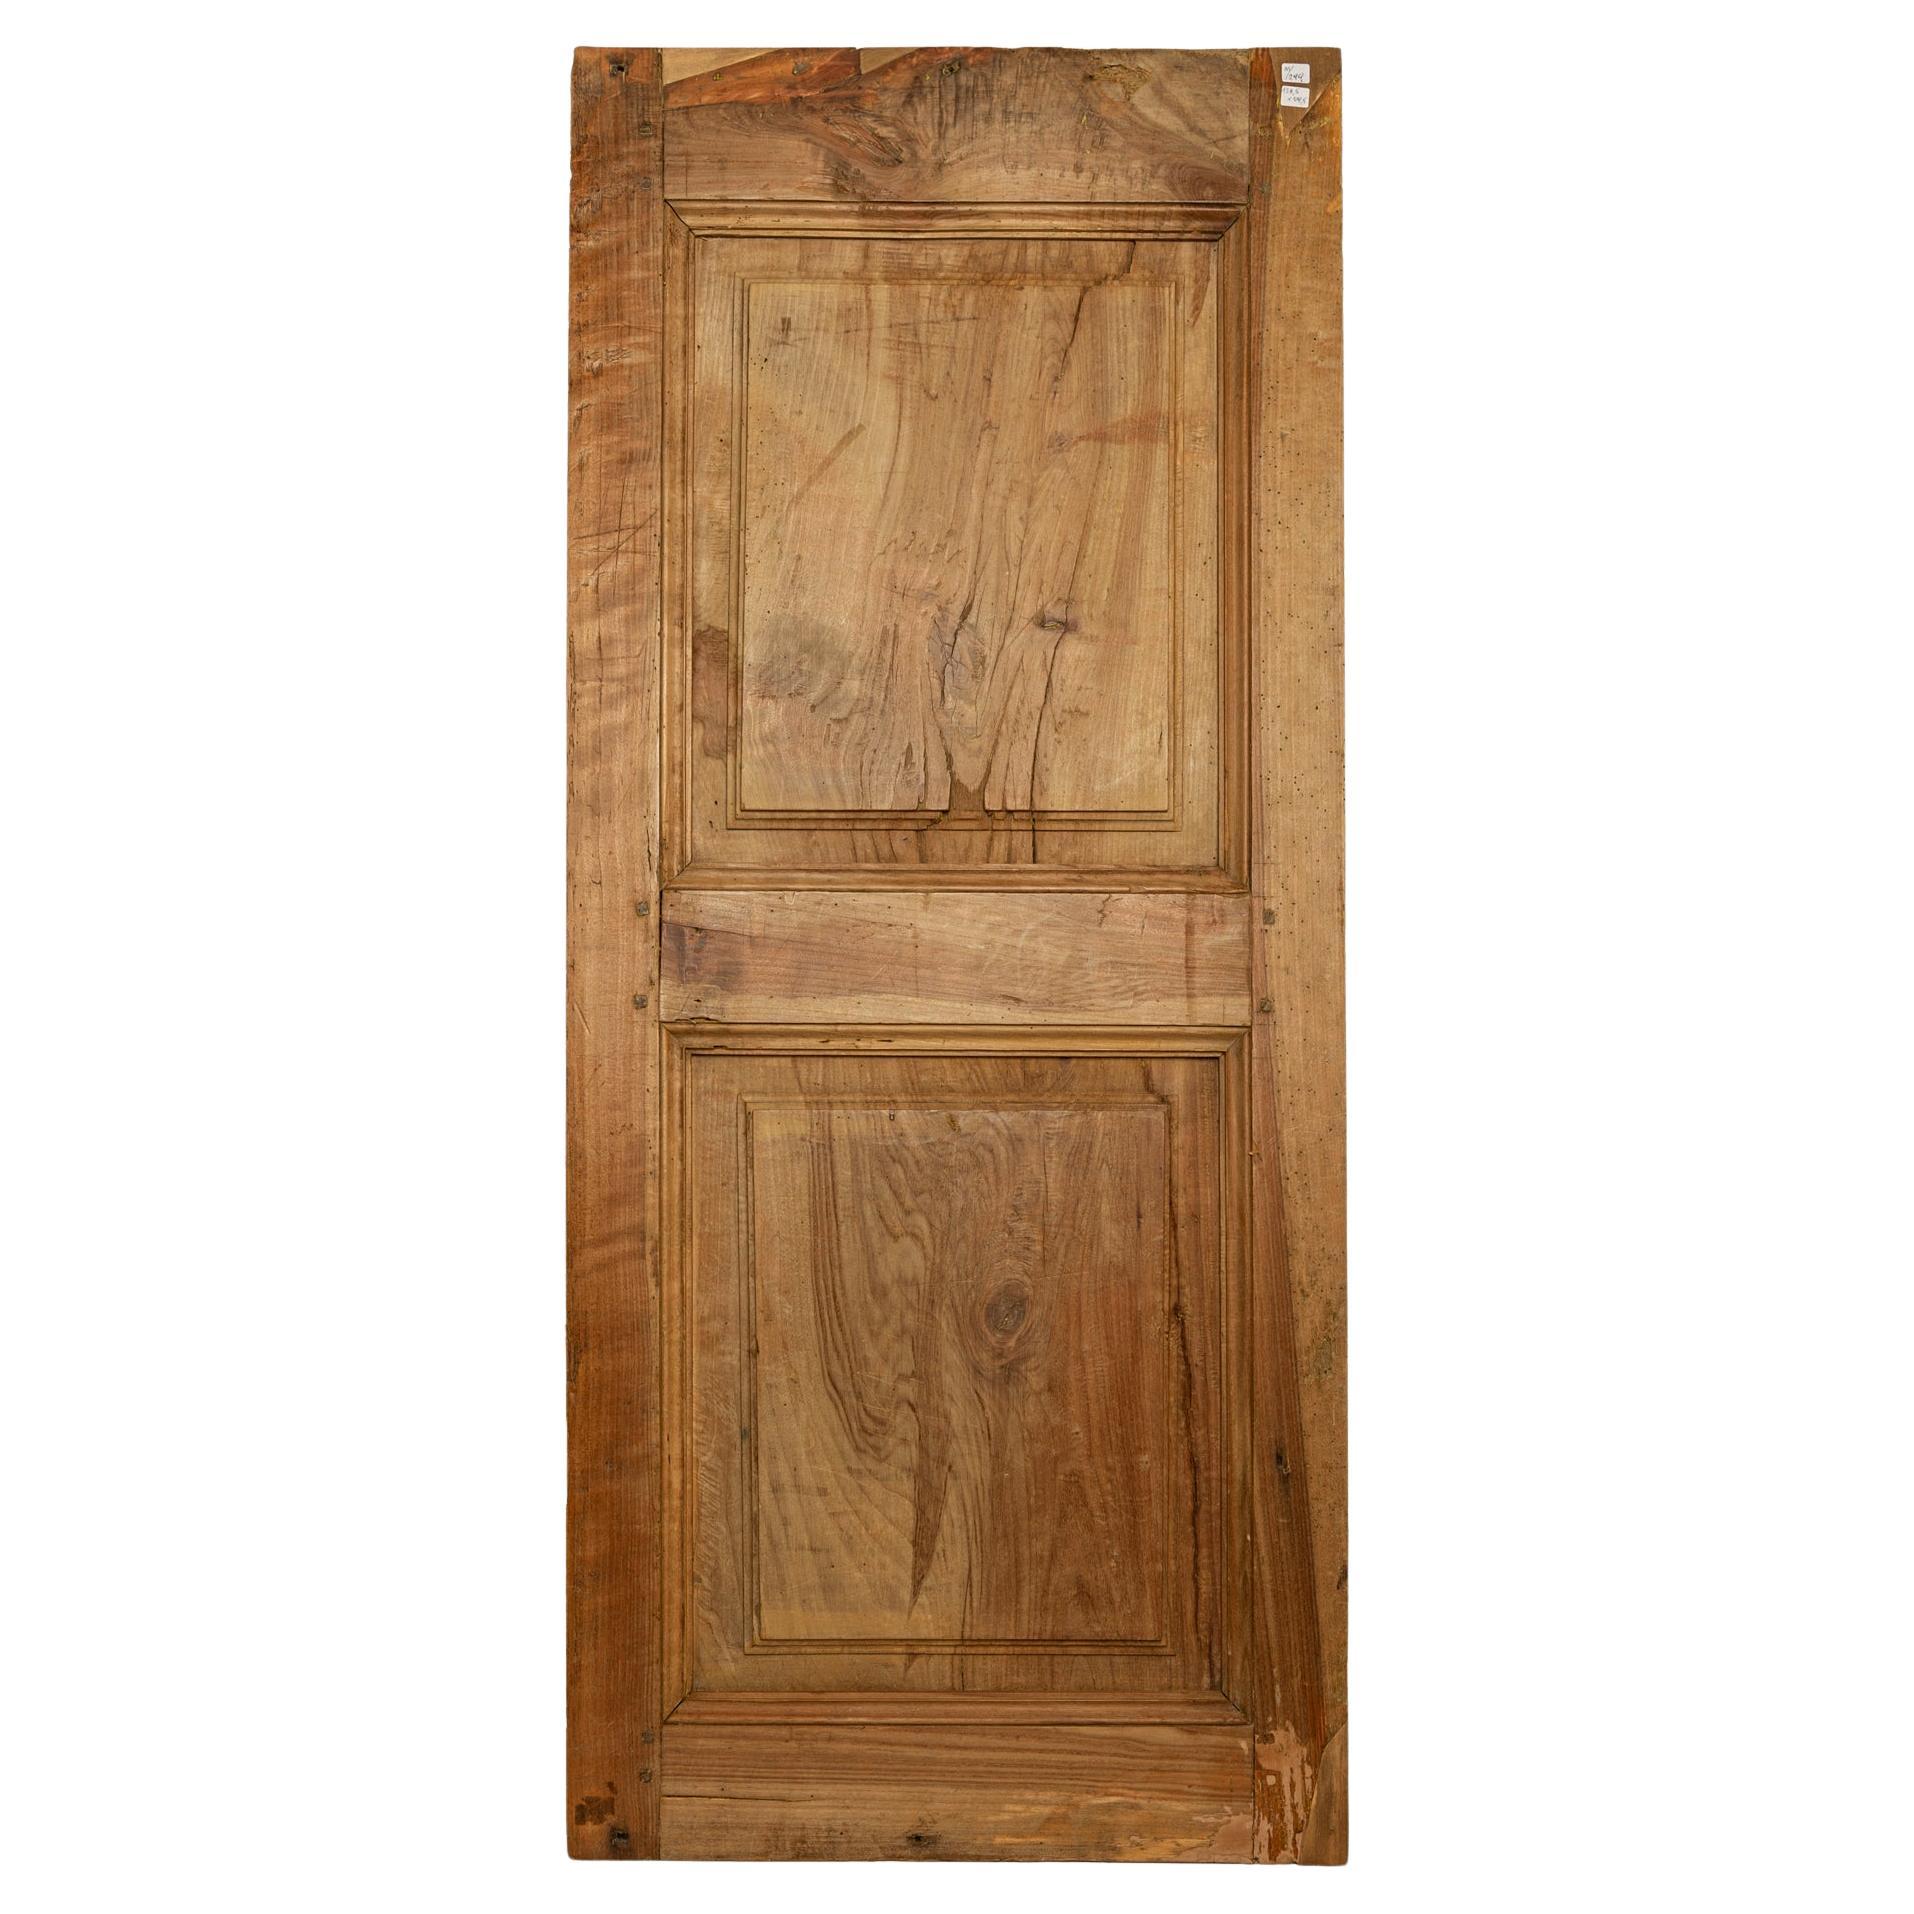 Wooden Panel with Little Ancient Italian Door For Sale